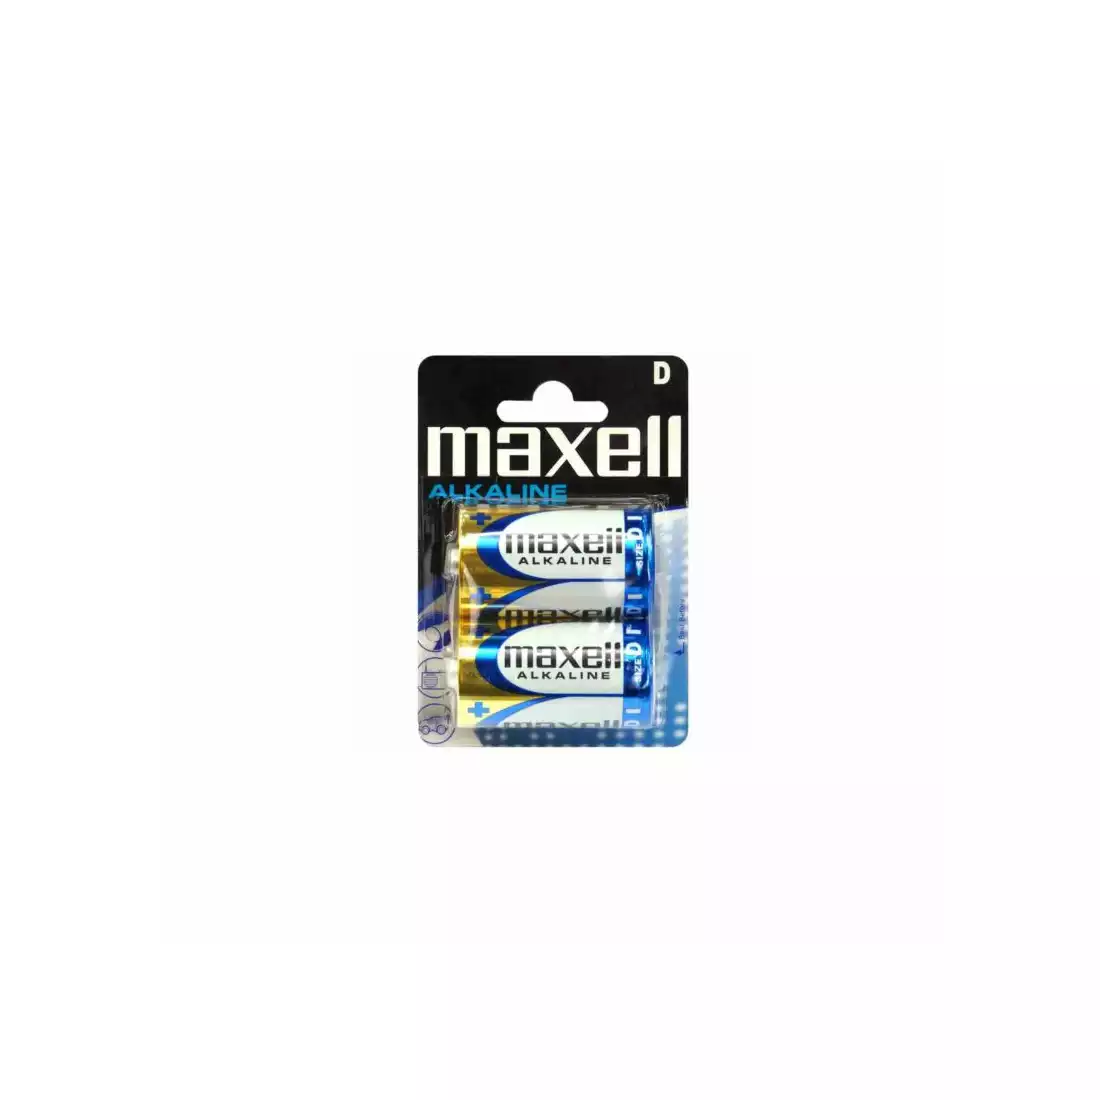 MAXELL R20 Alkaline batteries, 2 pcs